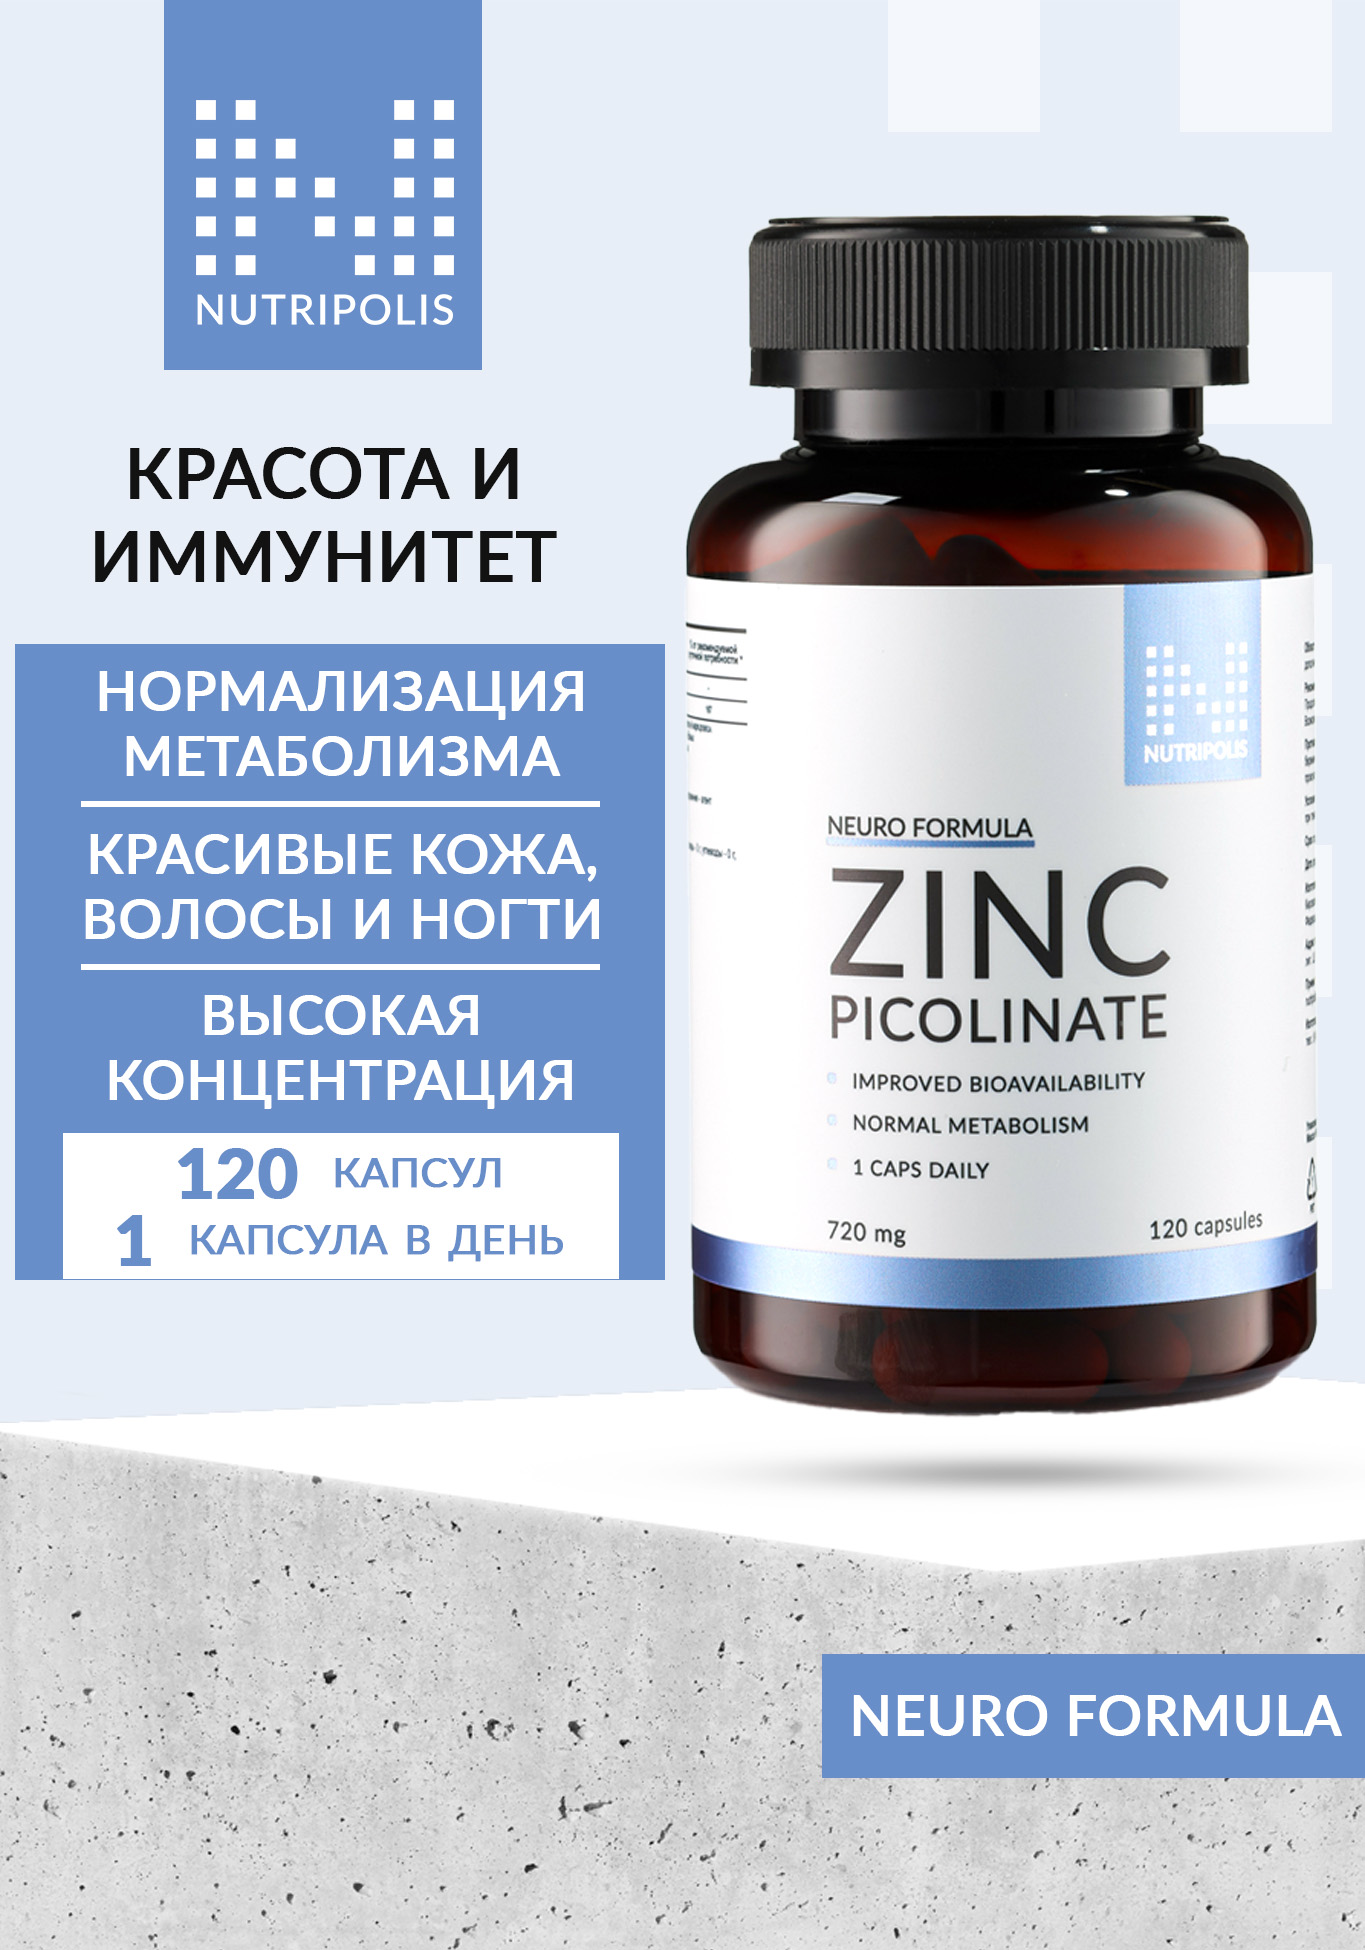 Zink picolinate (Пиколинат цинка) NUTRIPOLIS